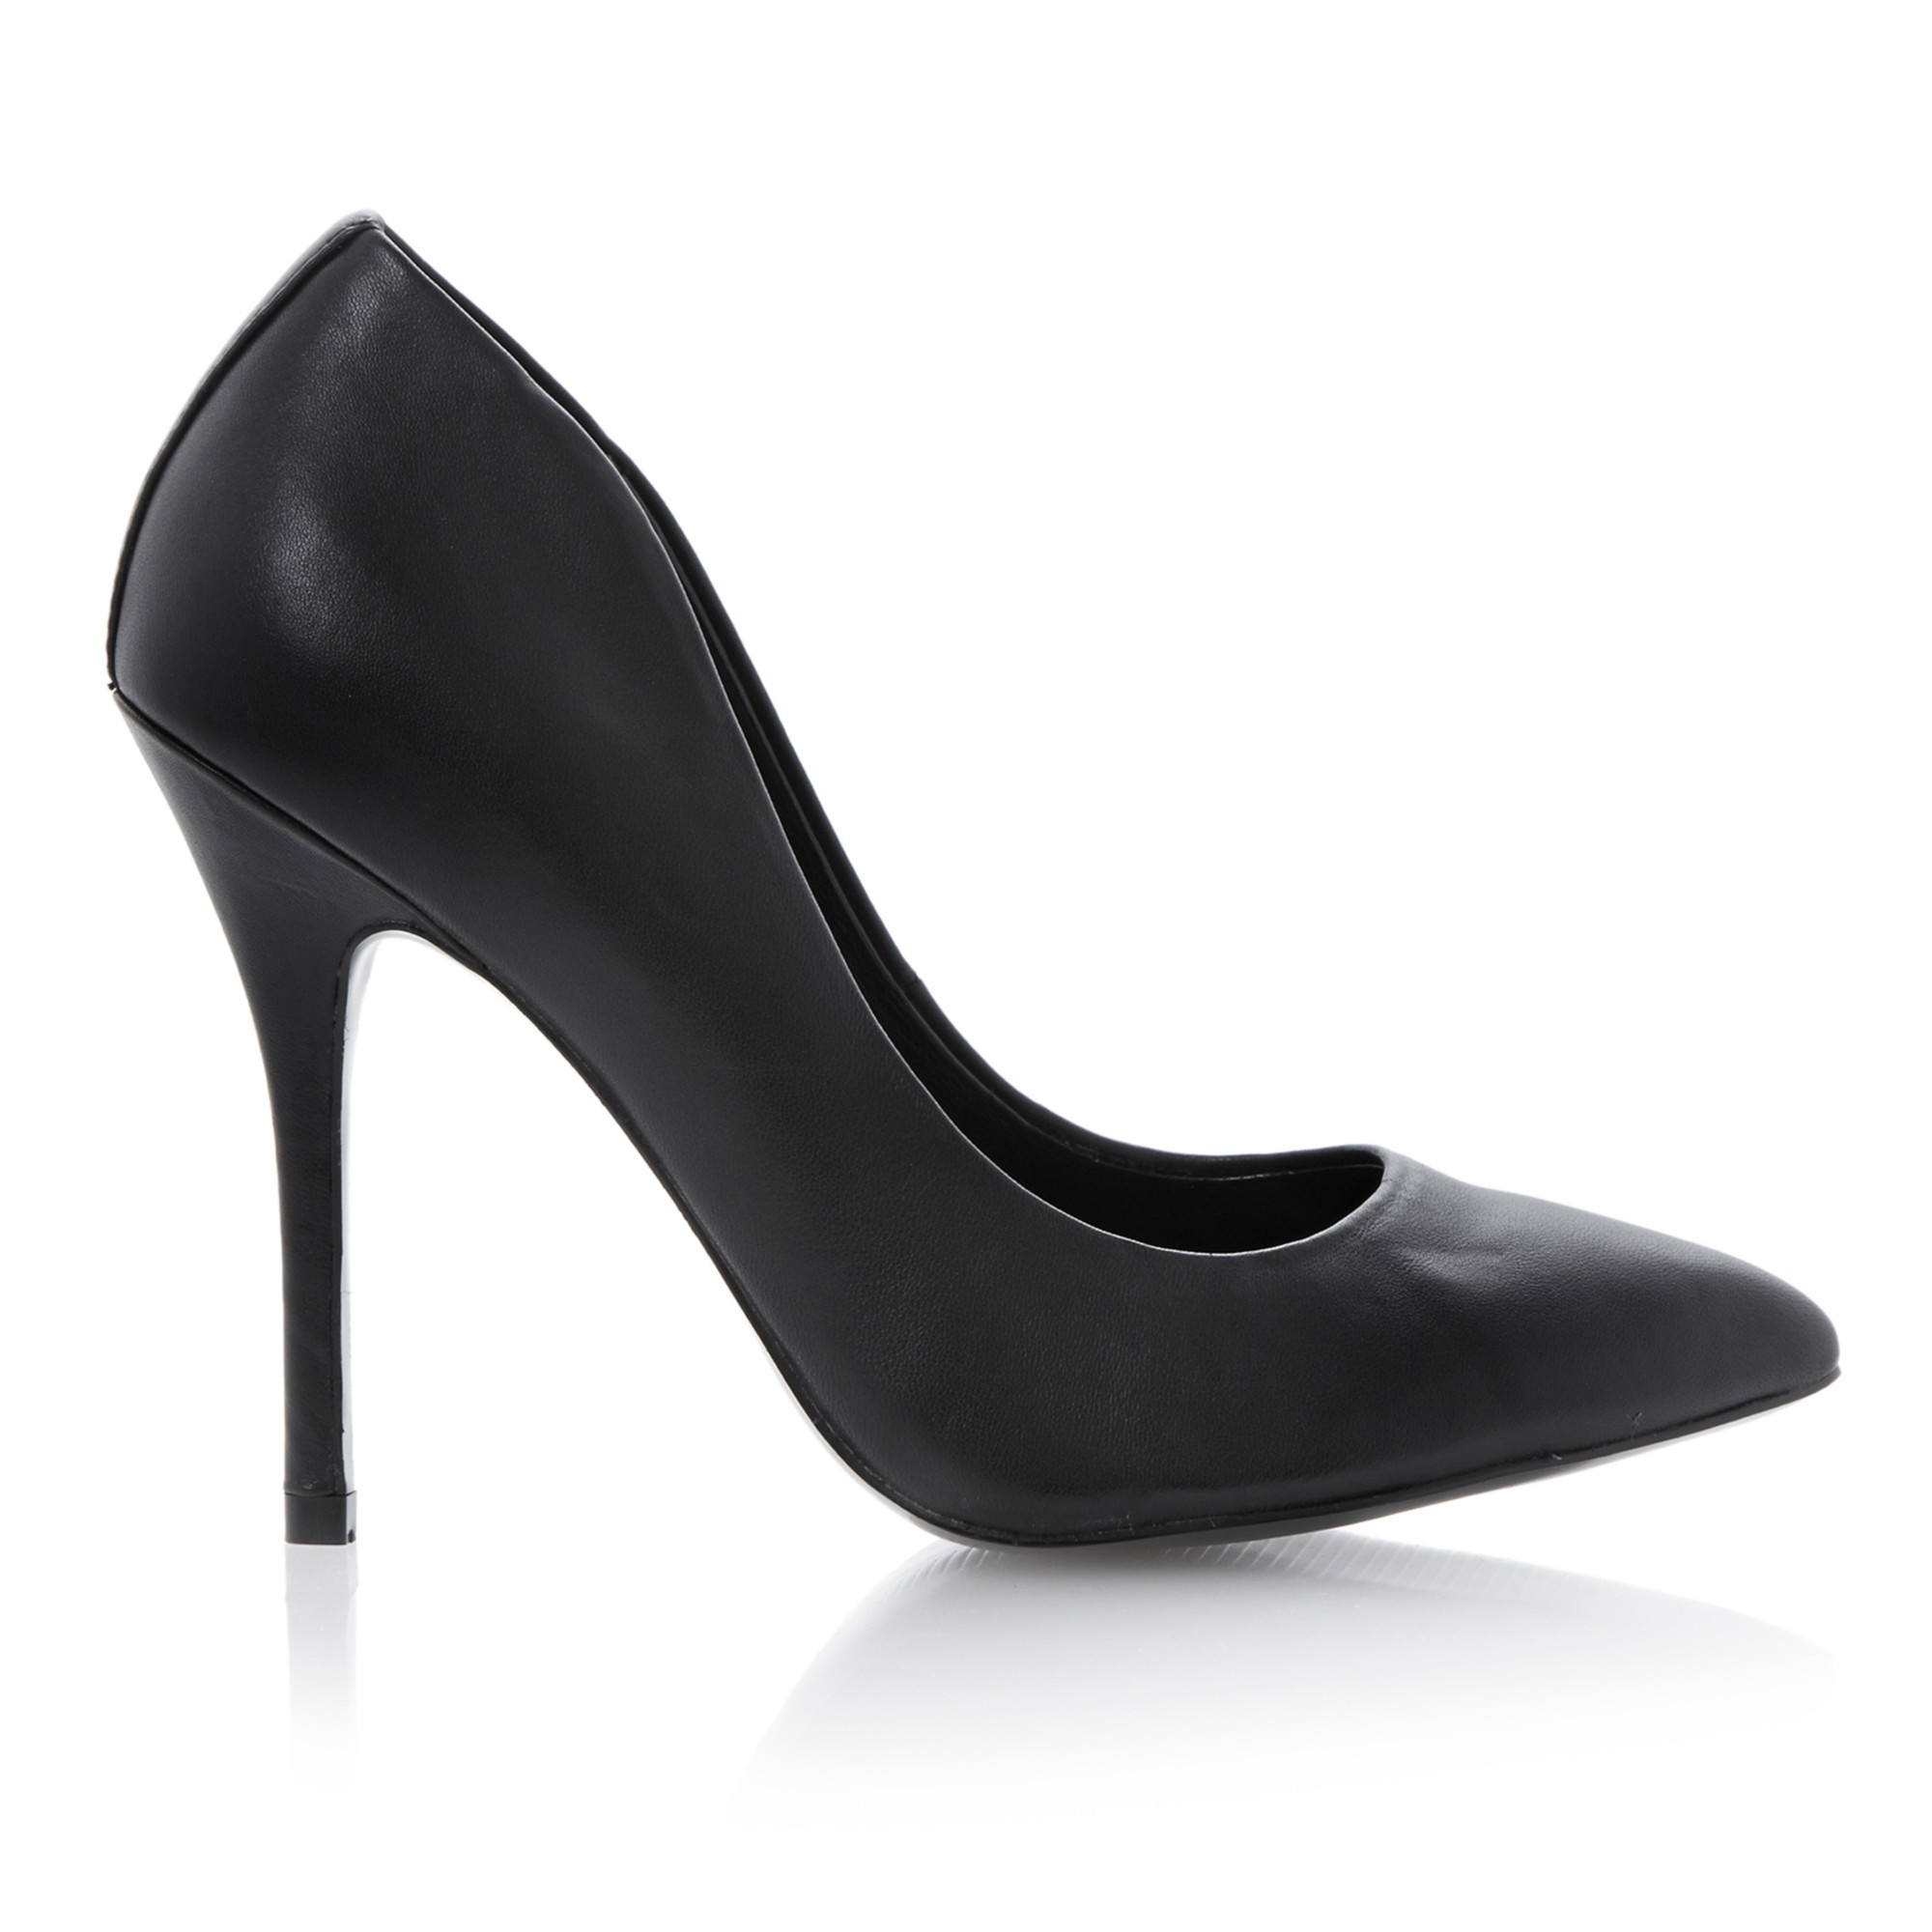 Steve Madden Galleryy Point Toe Stiletto Court Shoes in Black | Lyst